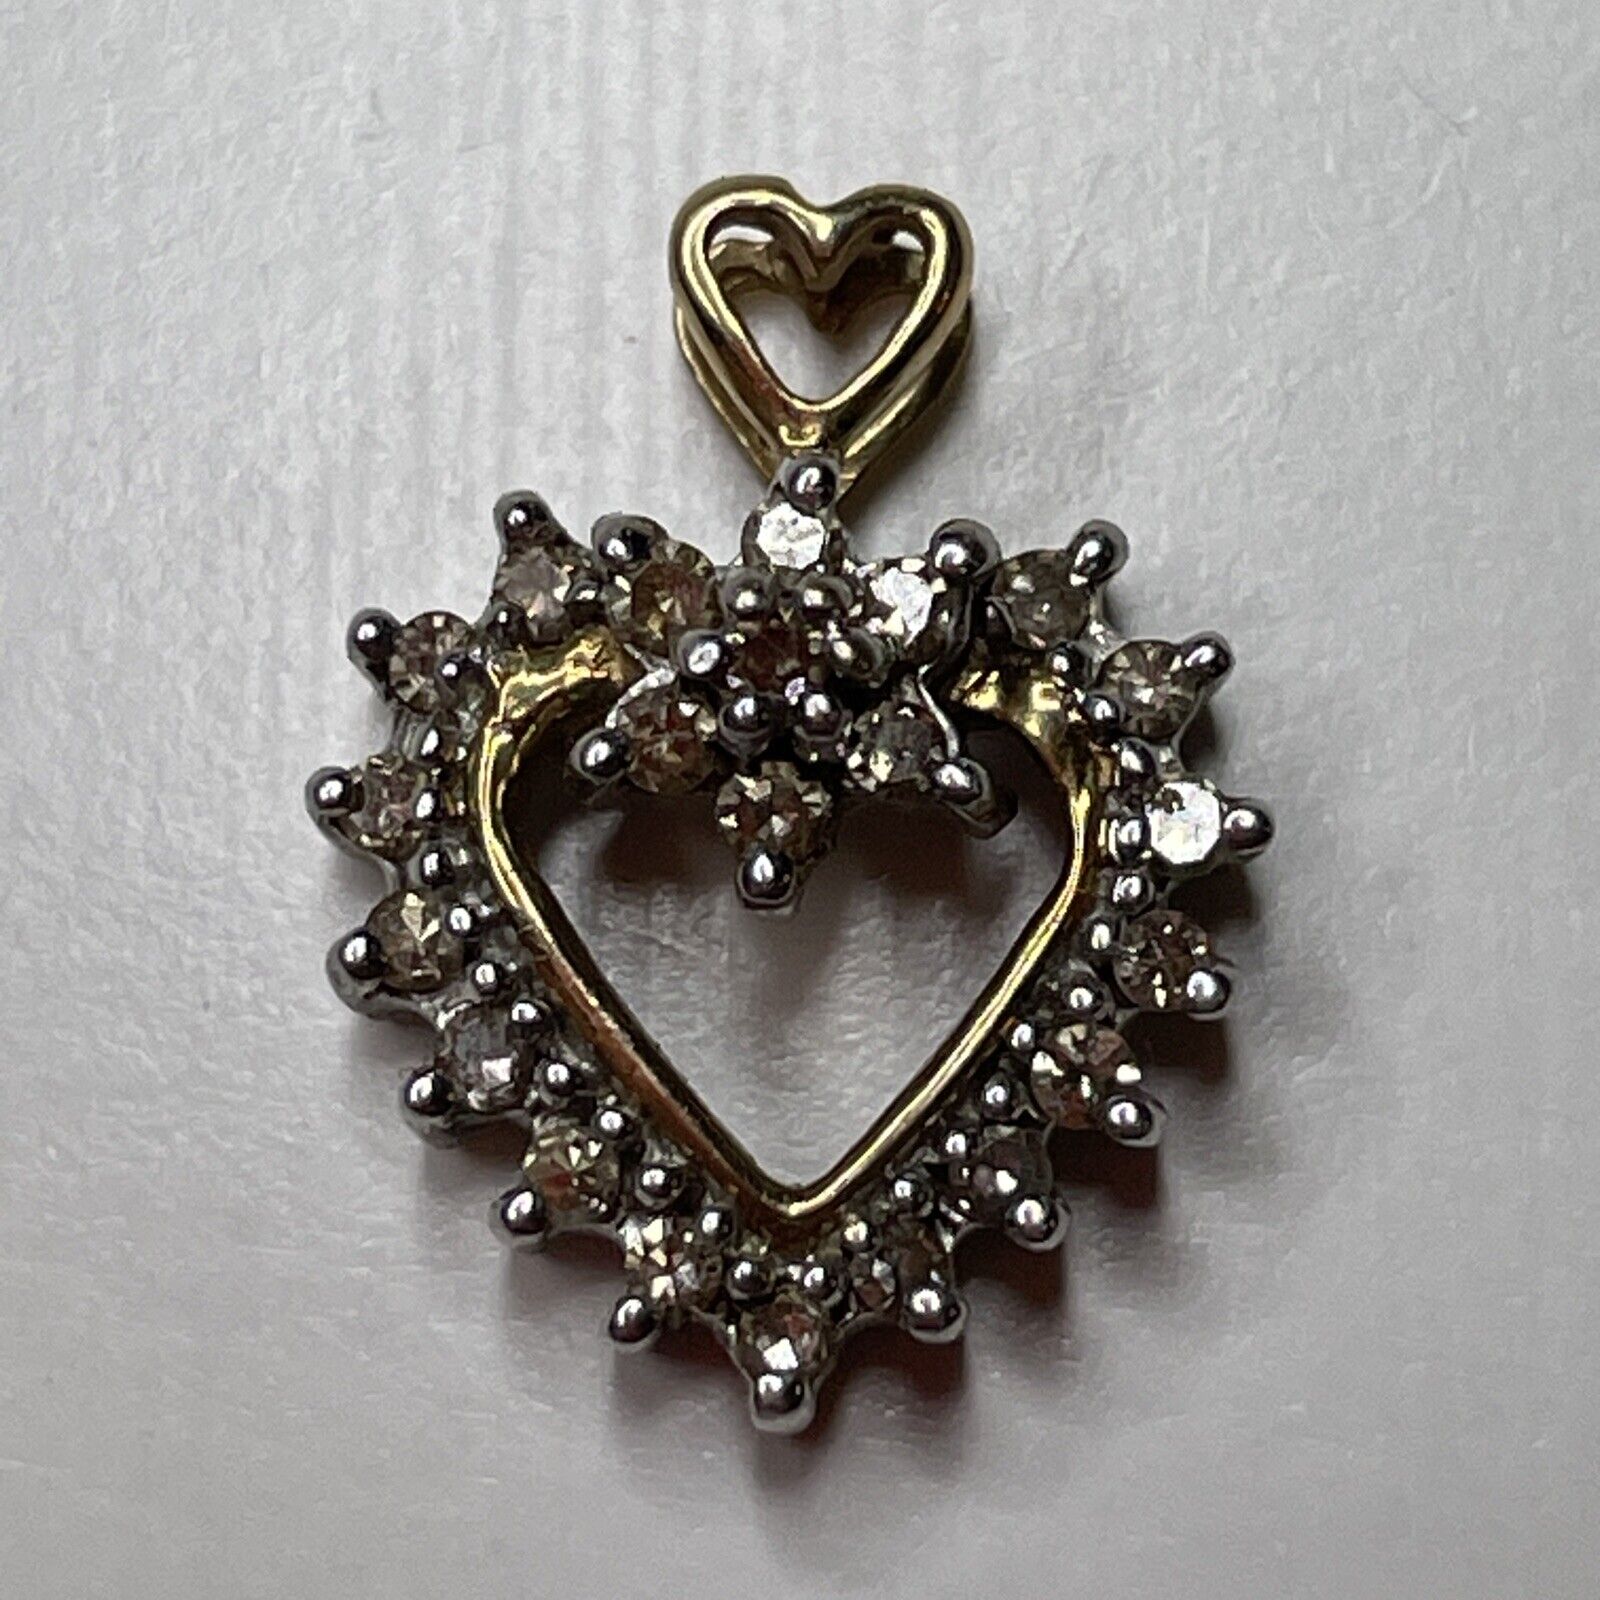 Vintage Solid Gold 10k Diamond Heart Pendant Necklace Chain Pendant Diamonds